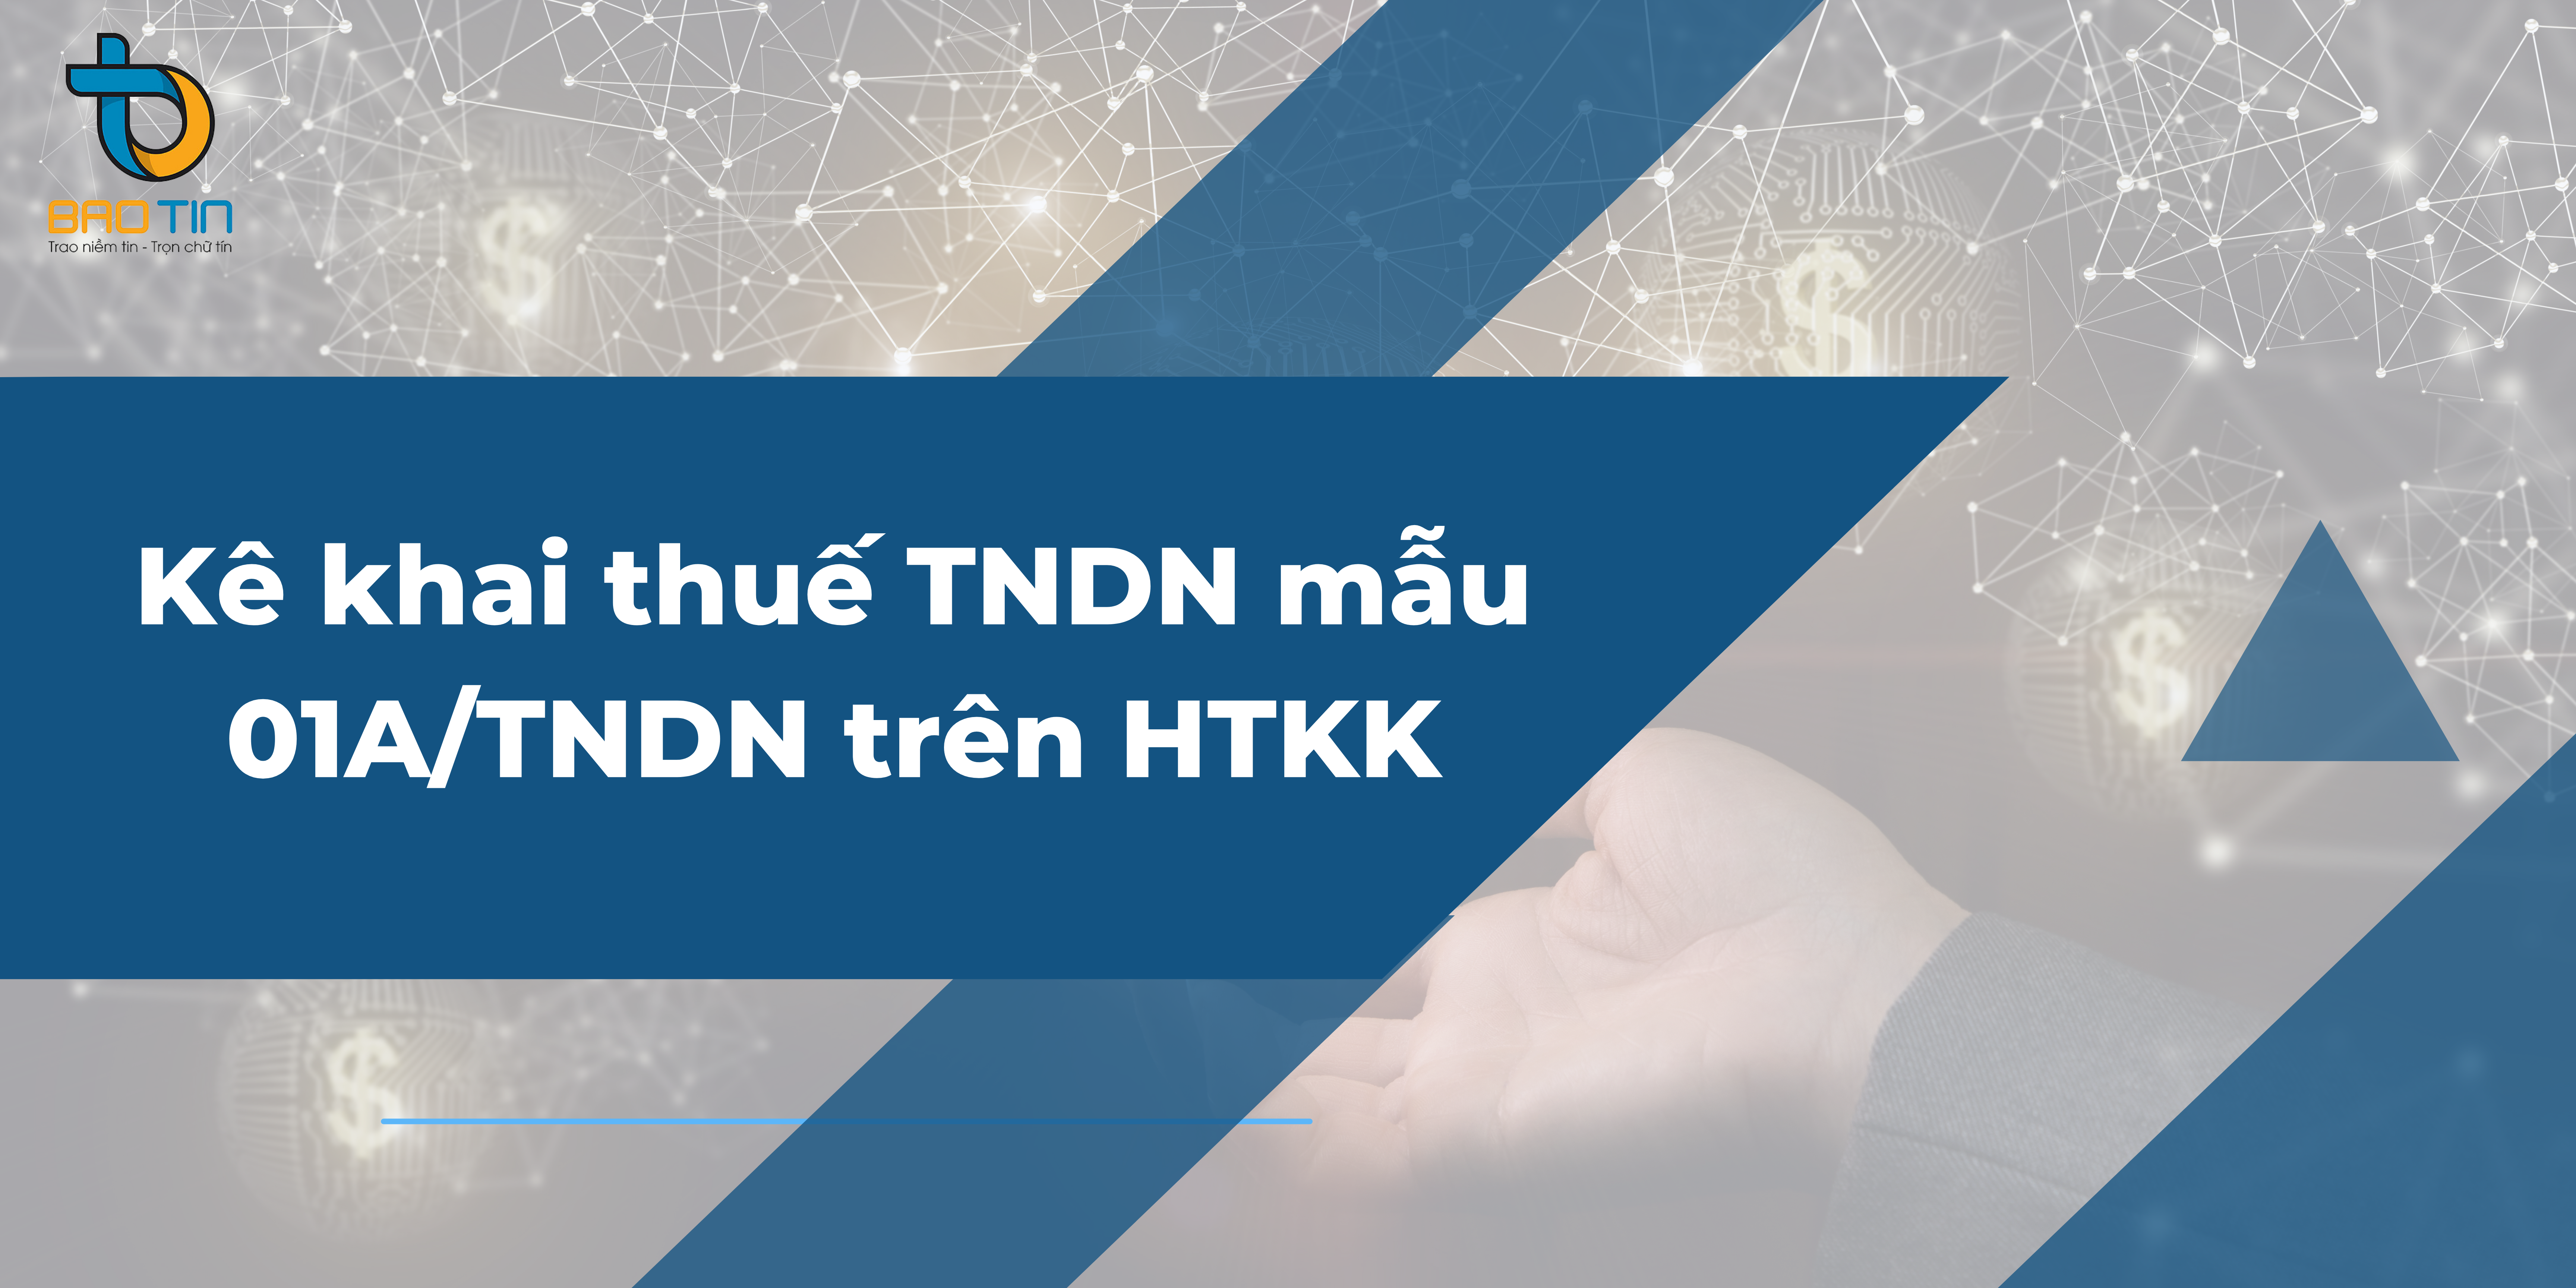 Hướng dẫn kê khai thuế TNDN mẫu 01A/TNDN trên HTKK